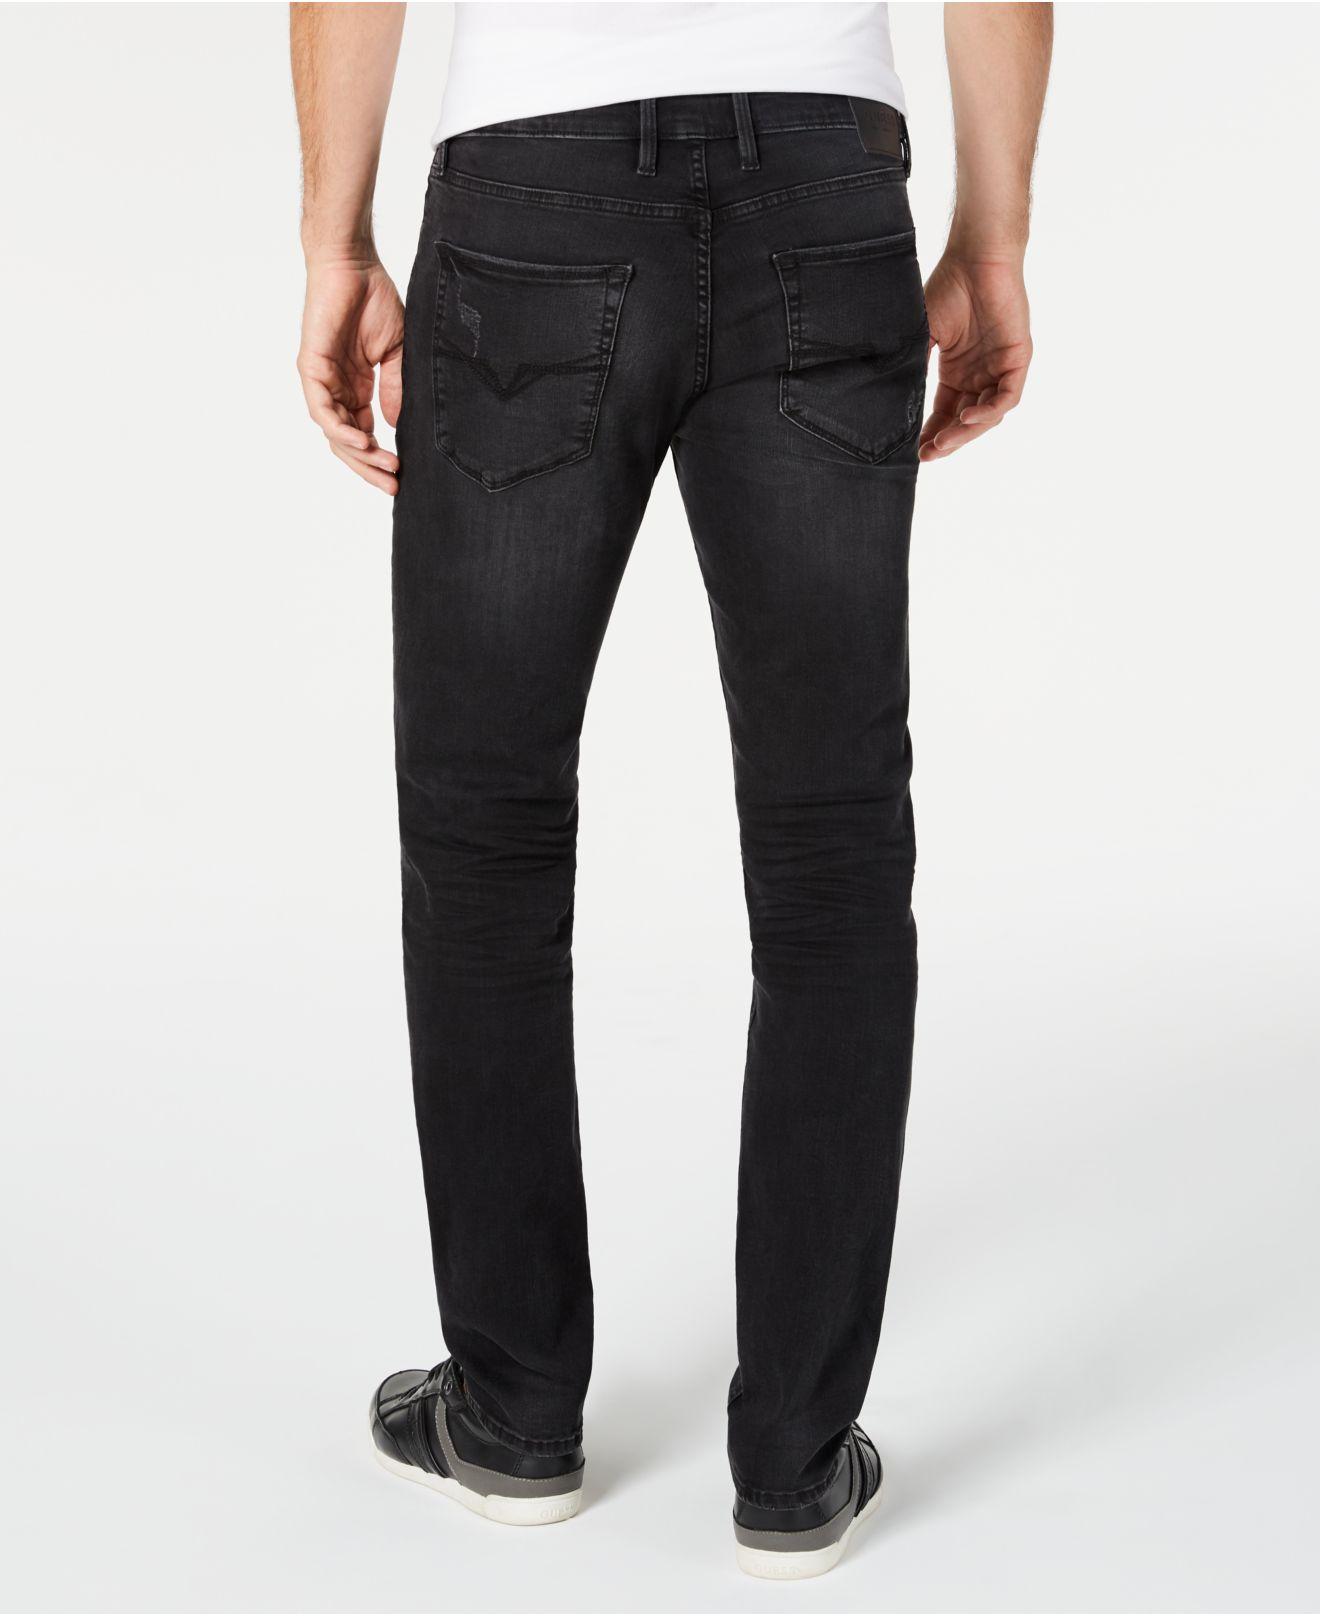 Guess Denim Slim-fit Black Jeans for Men - Lyst